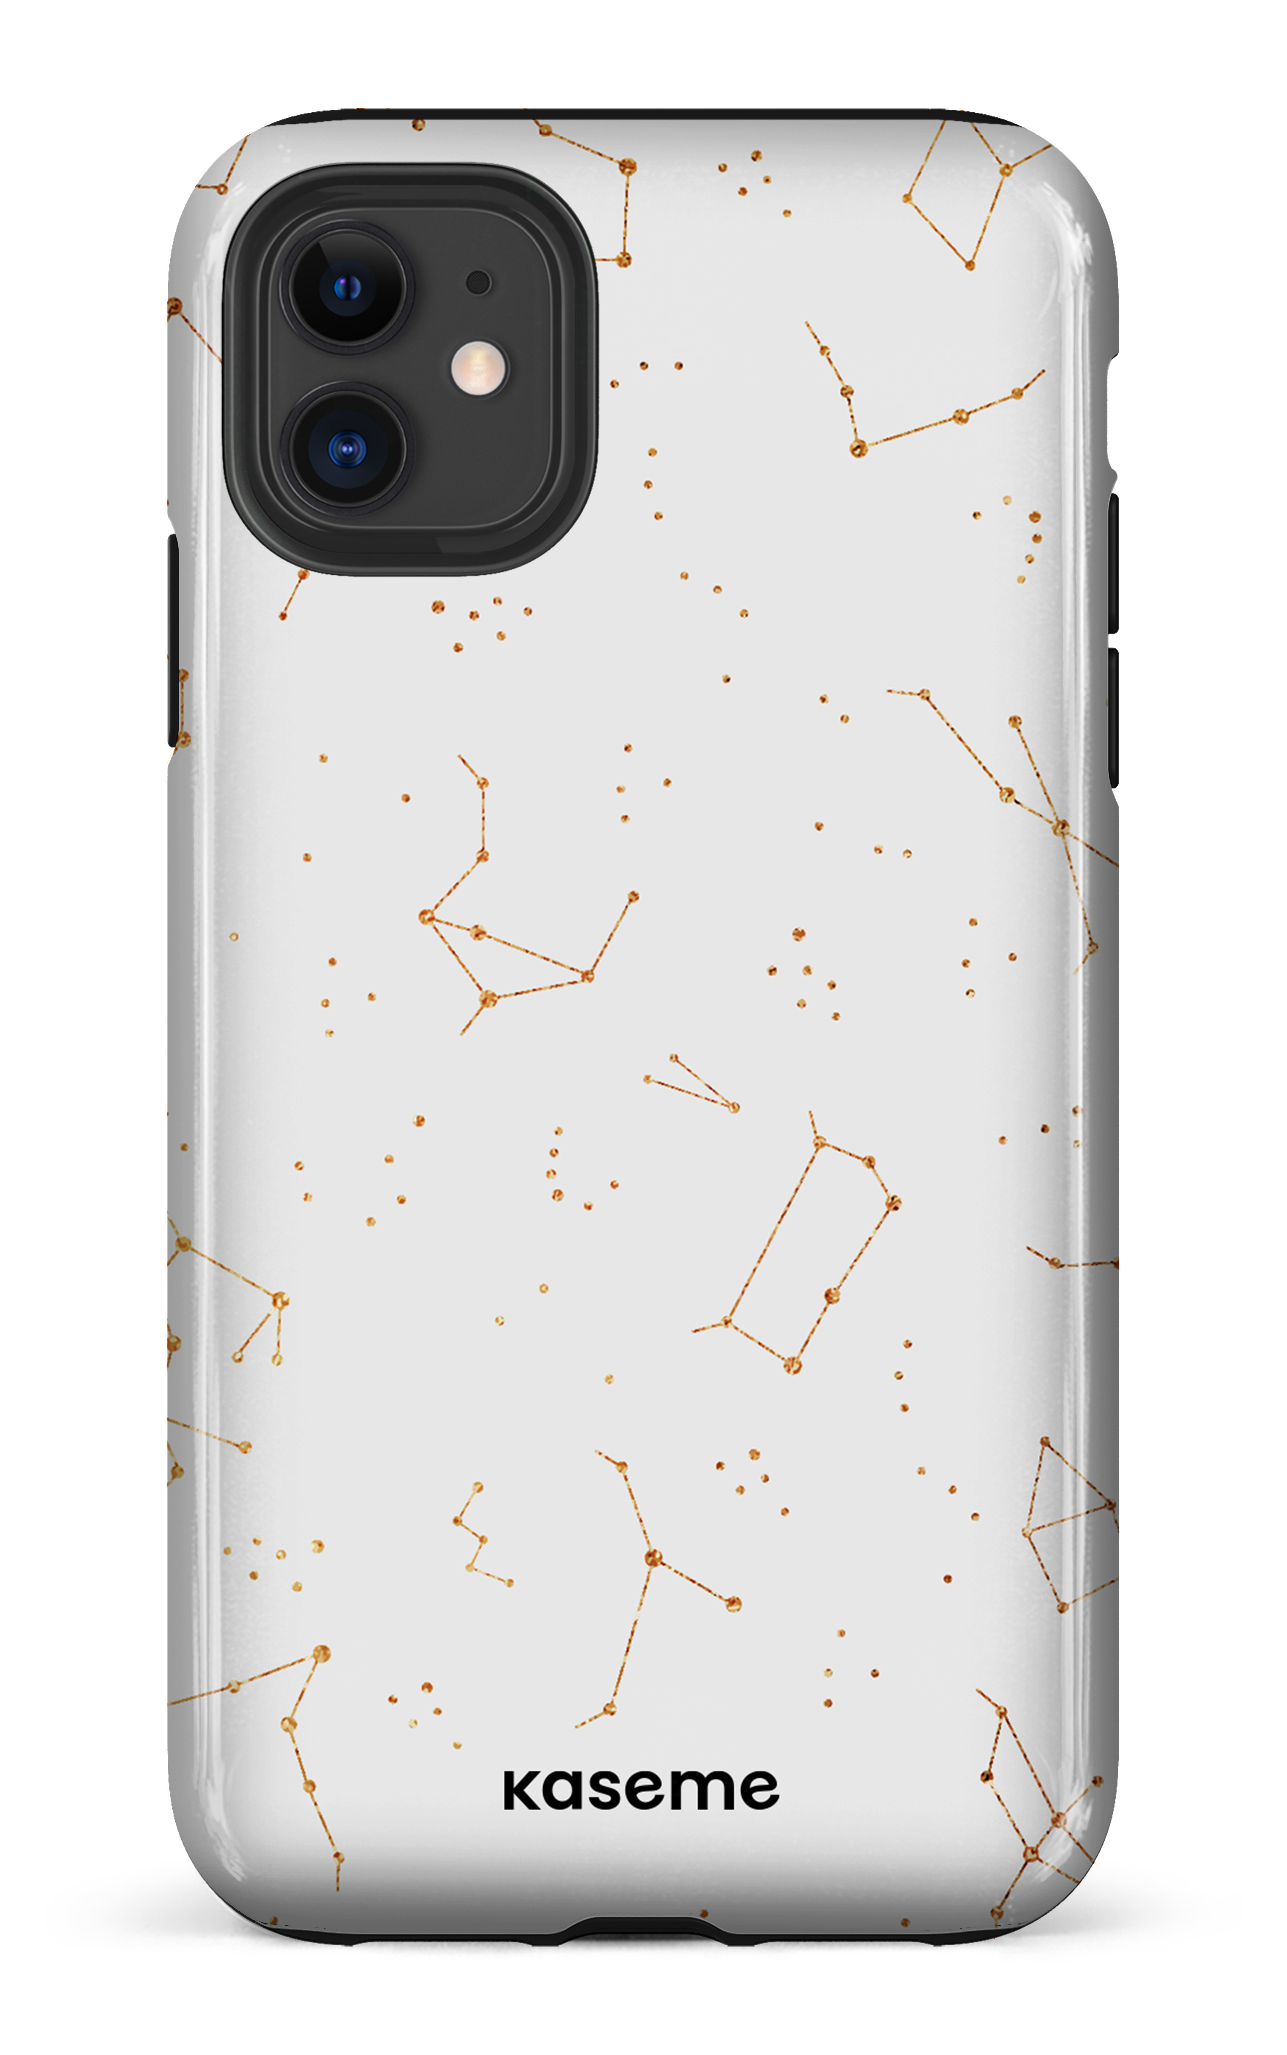 Stardust sky - iPhone 11